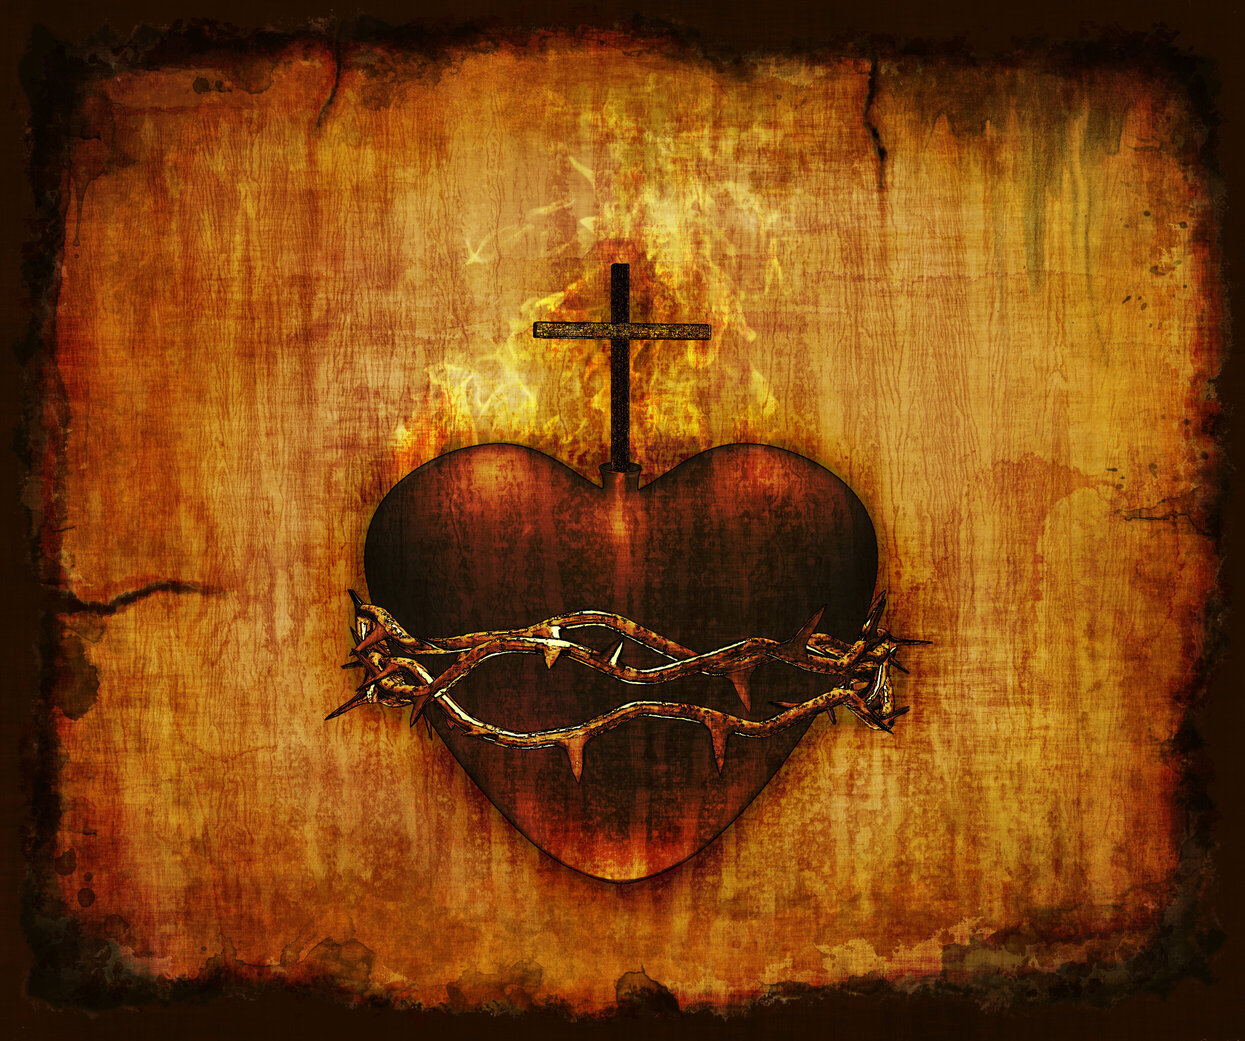 June: The Sacred Heart of Jesus